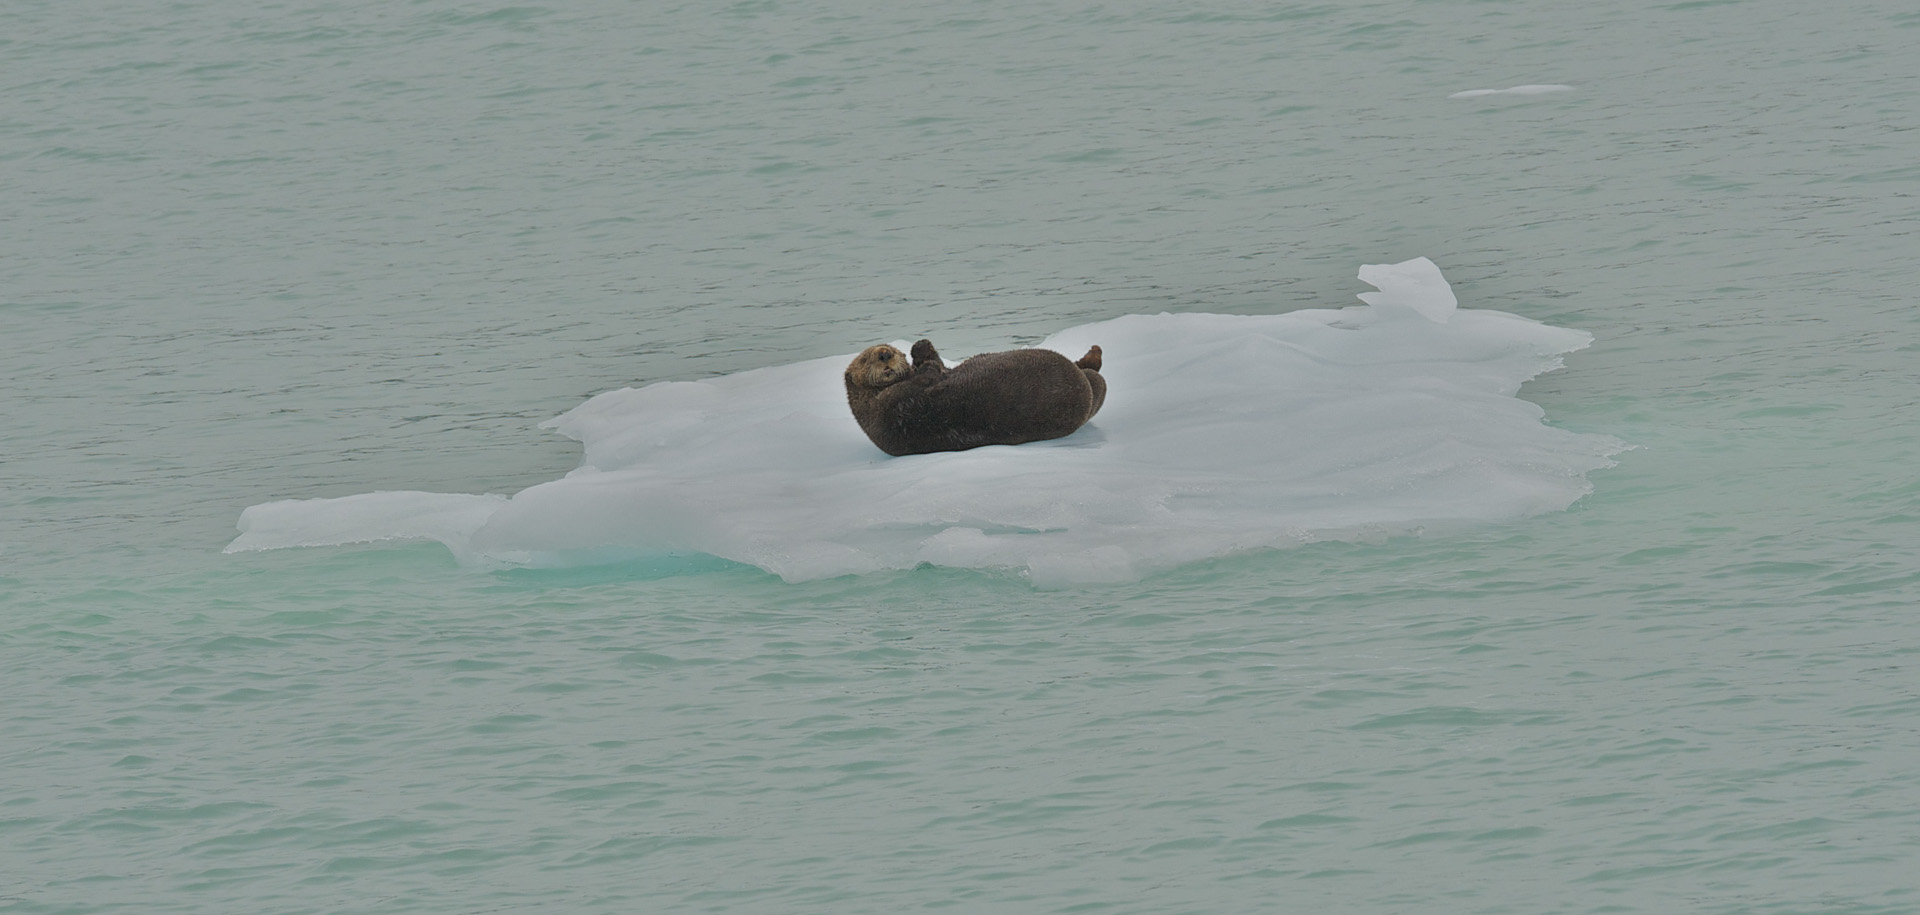 A sea otter on an ice berg.